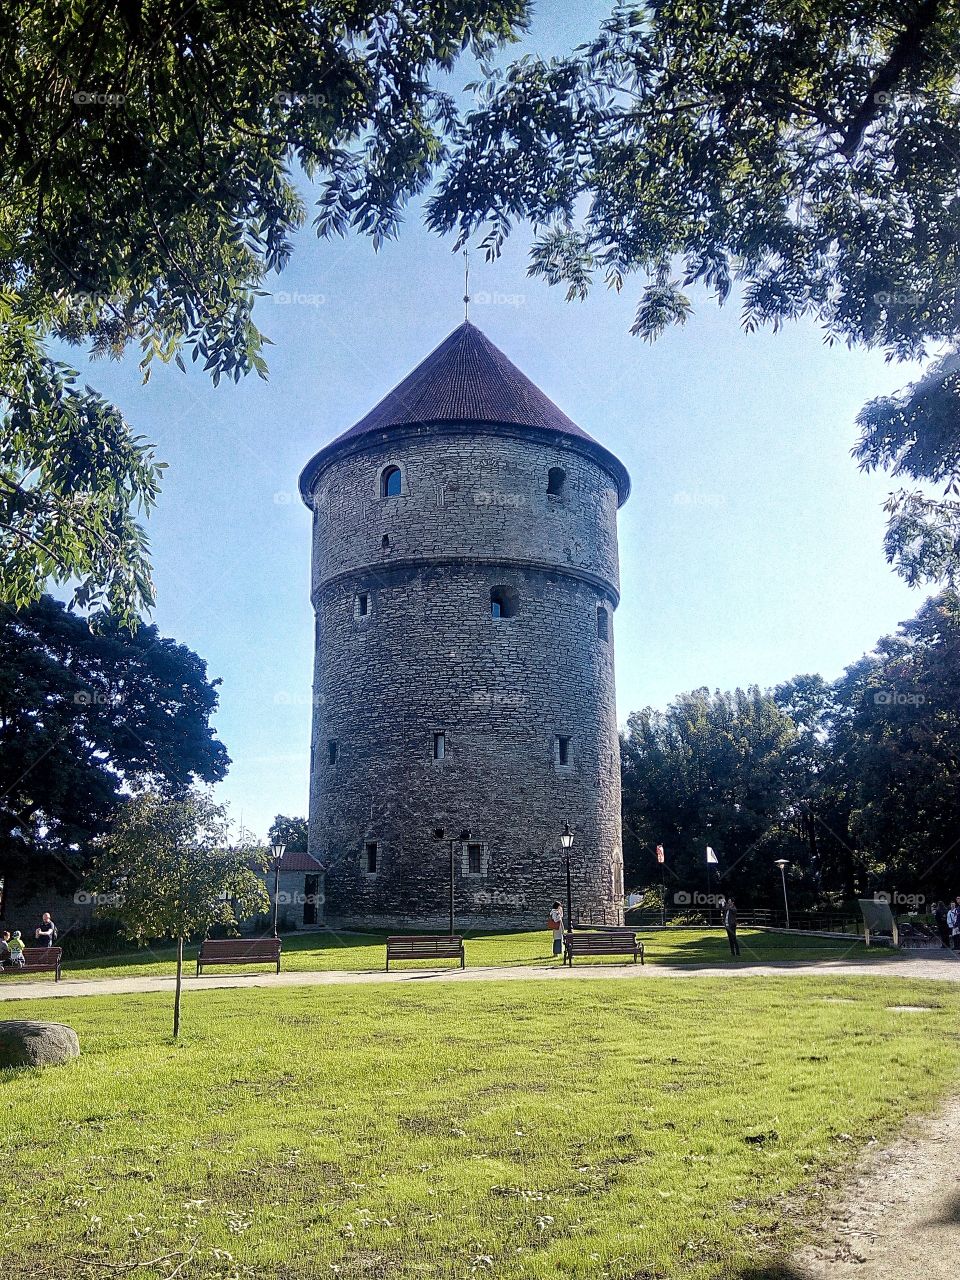 Interesting tower of Tallinn